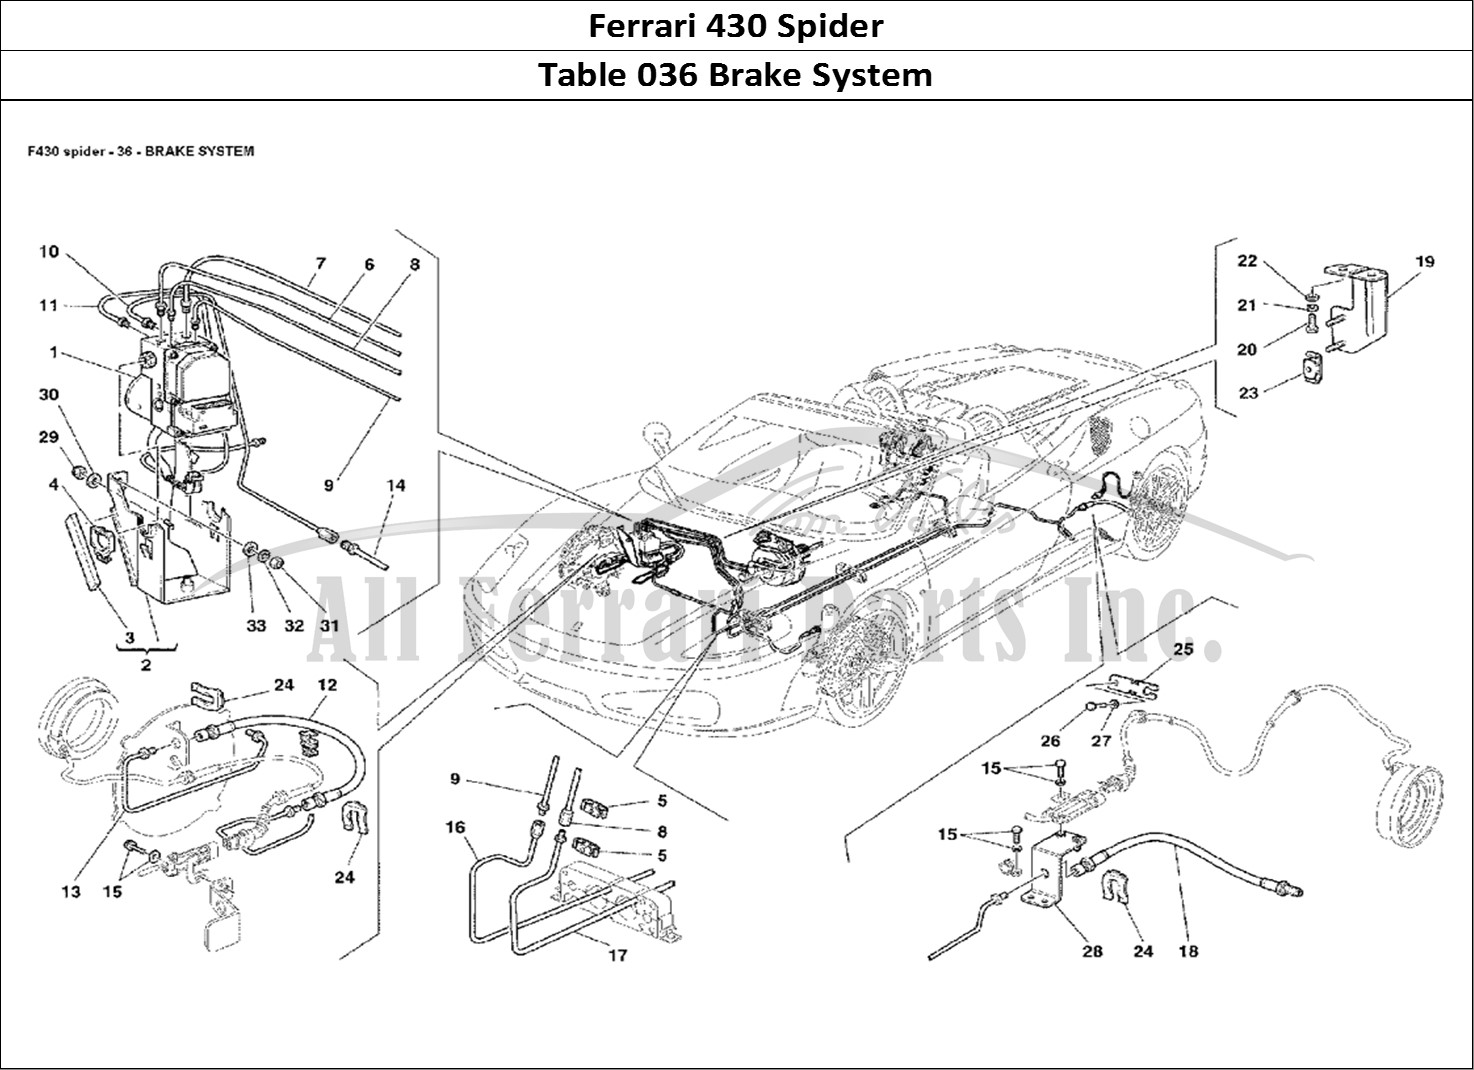 Ferrari Parts Ferrari 430 Spider Page 036 Brake System